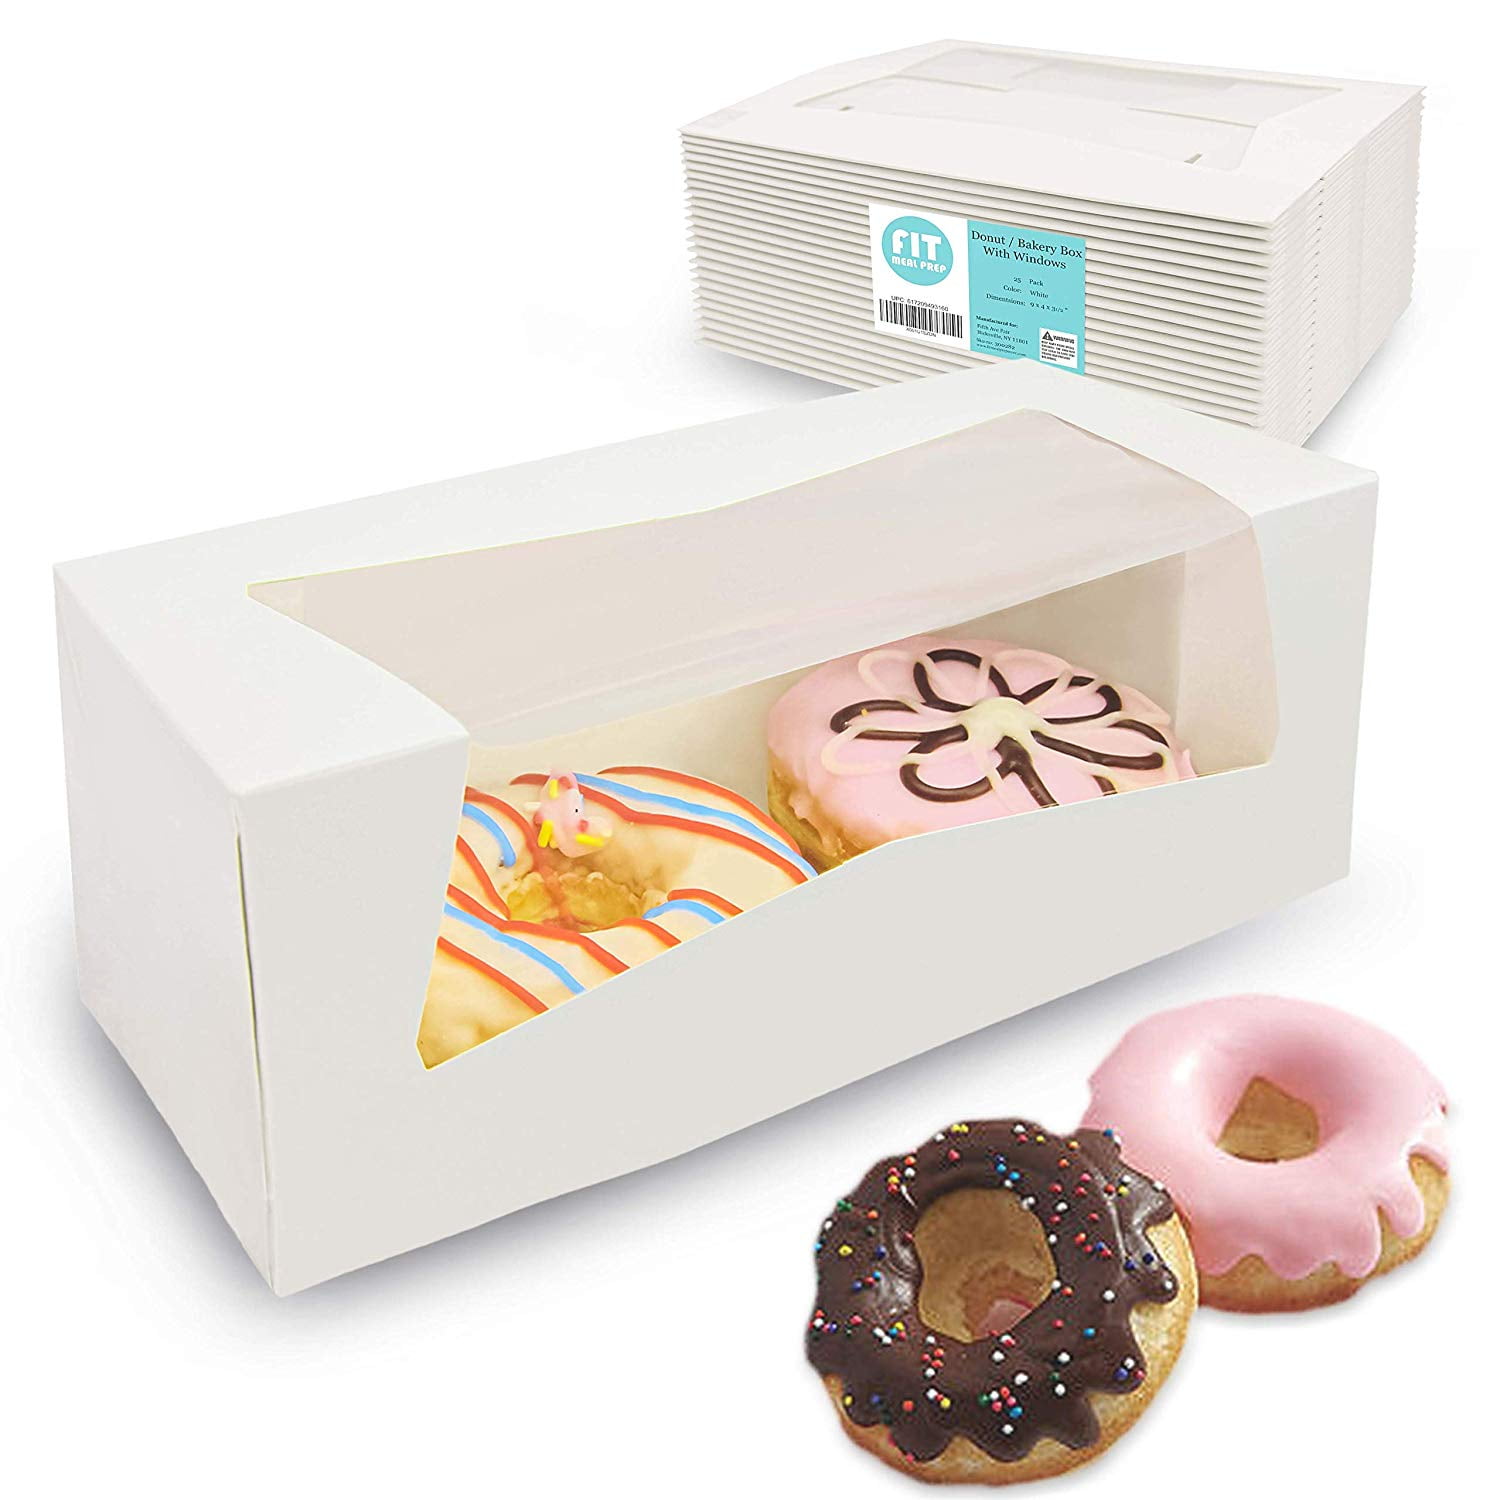 Donut Bakery Box 9" Length x 4" Width x 3.5" Height White Wi...